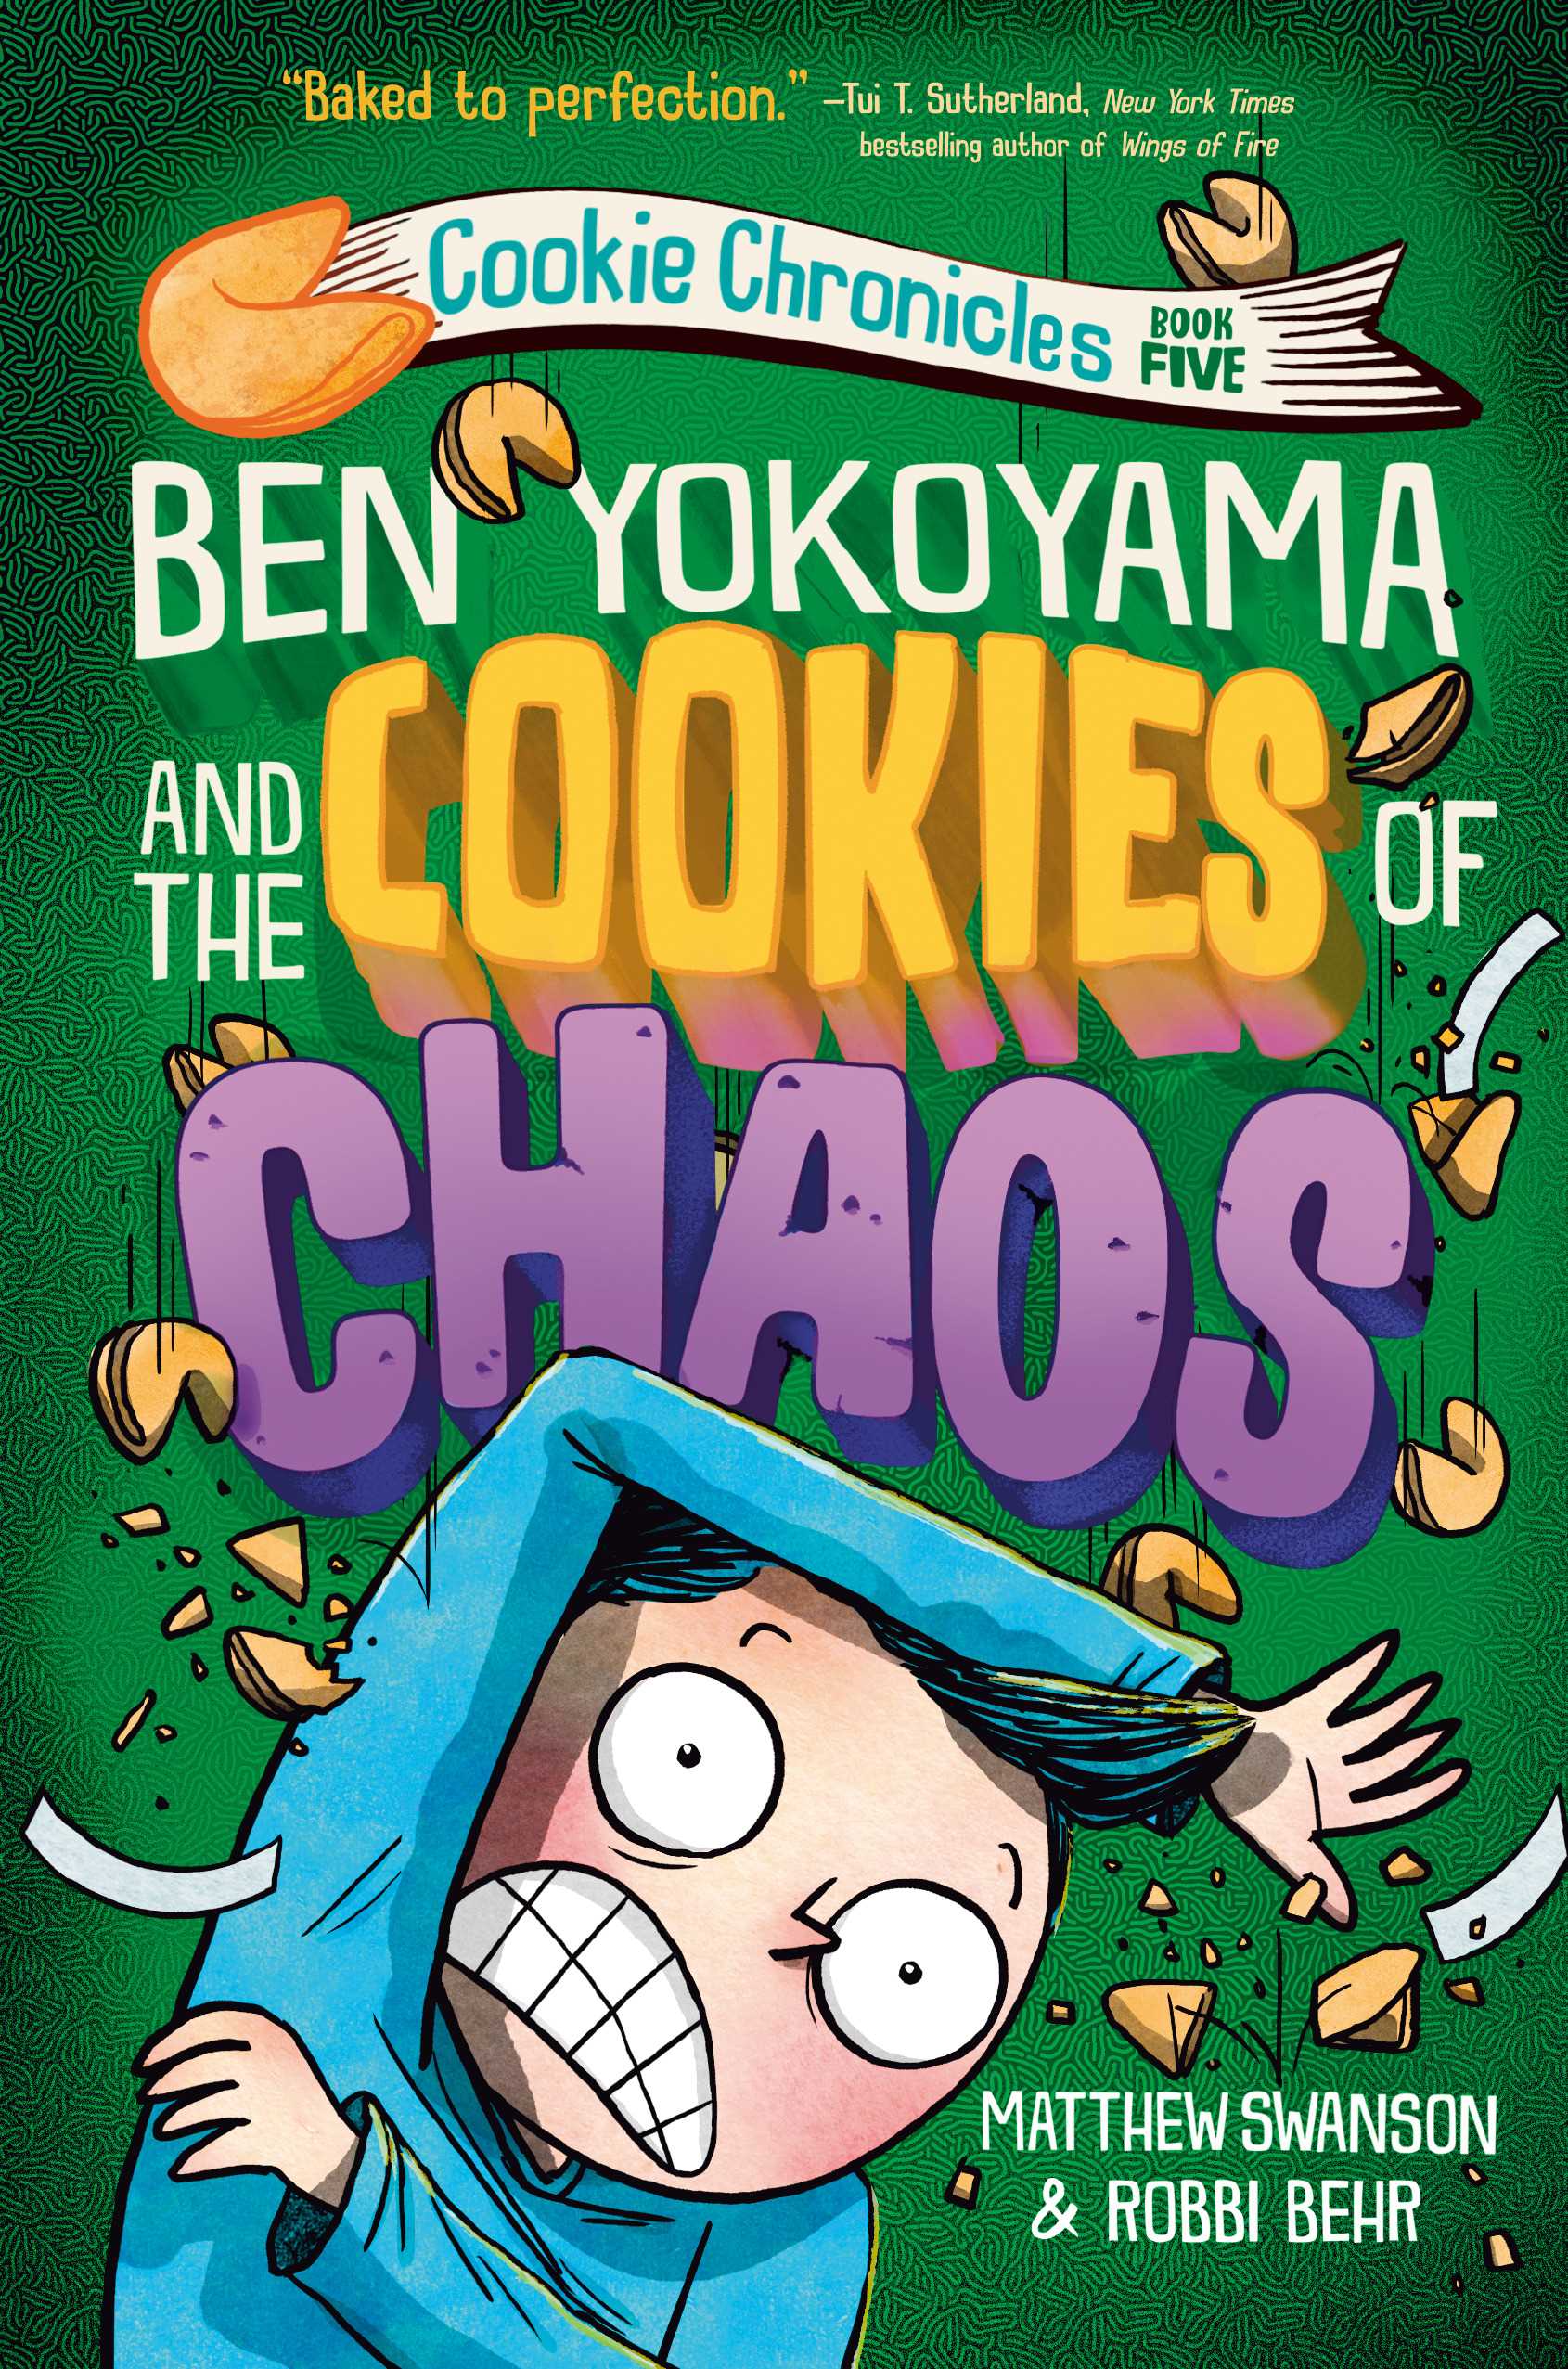 Cookie Chronicles #05: Ben Yokoyama and the Cookies of Chaos